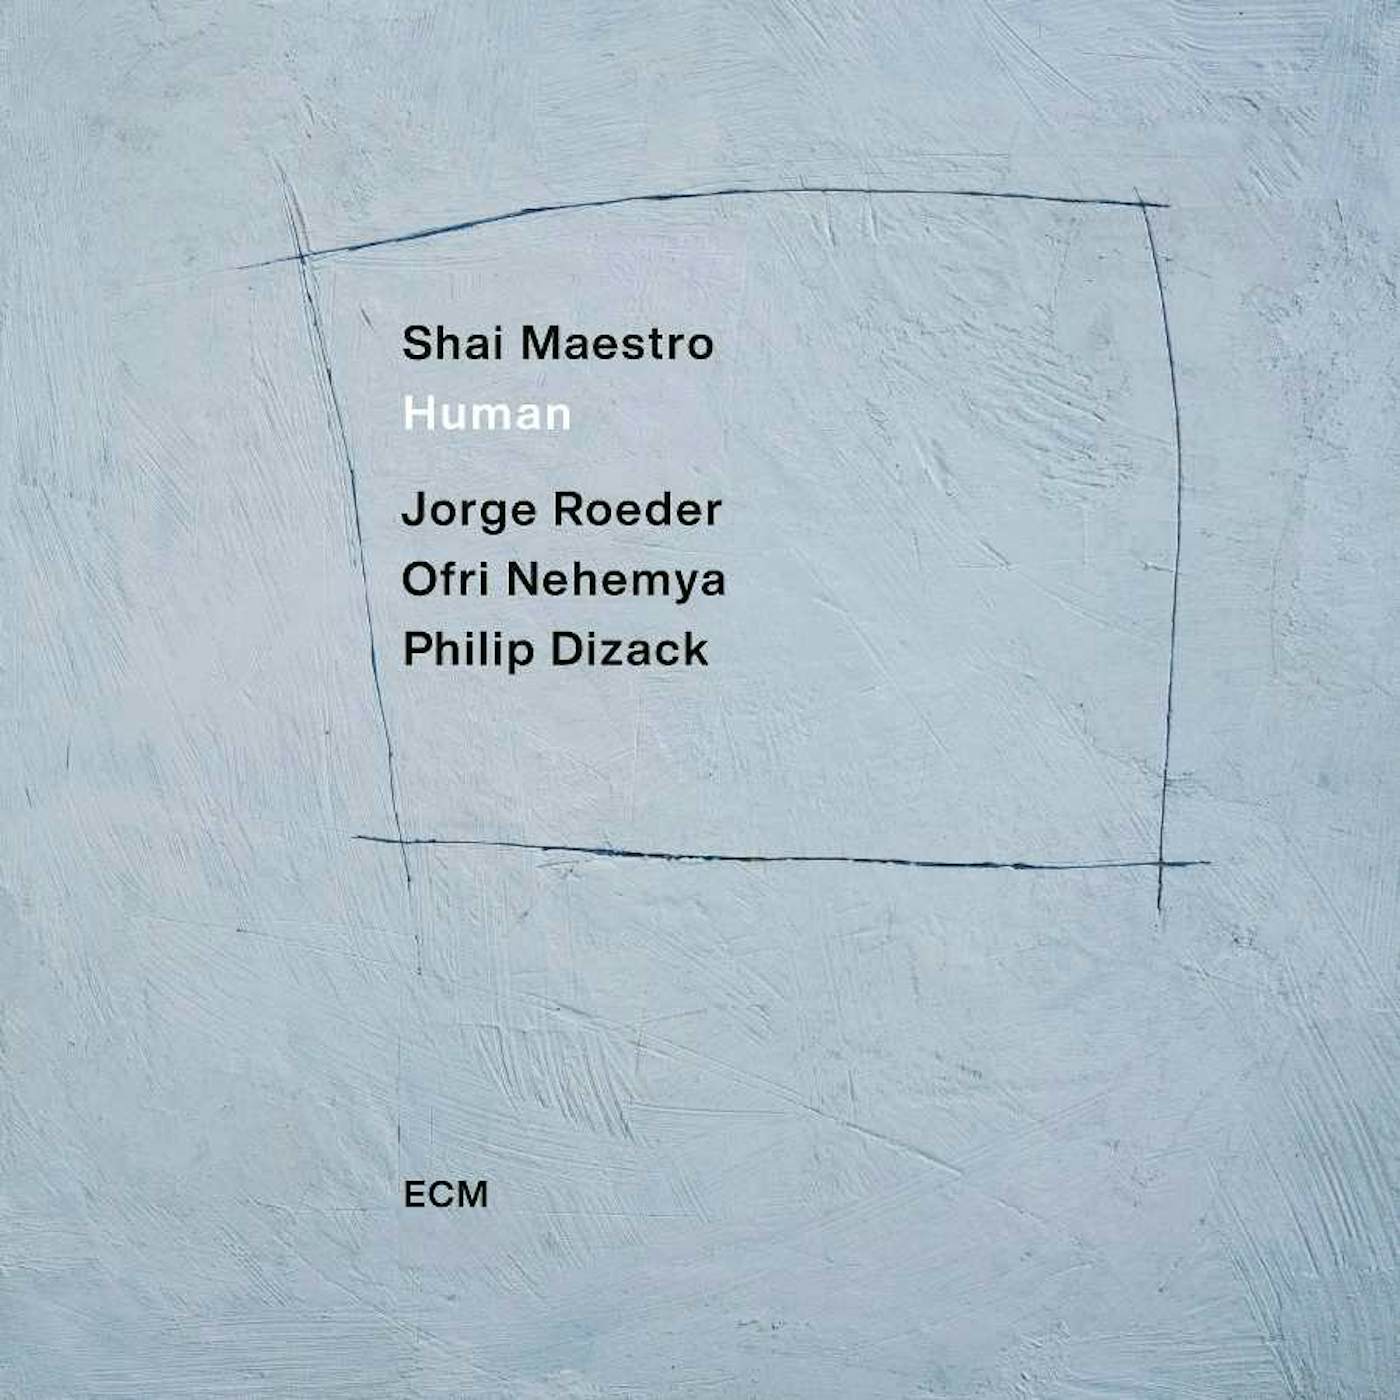 Shai Maestro Human Vinyl Record